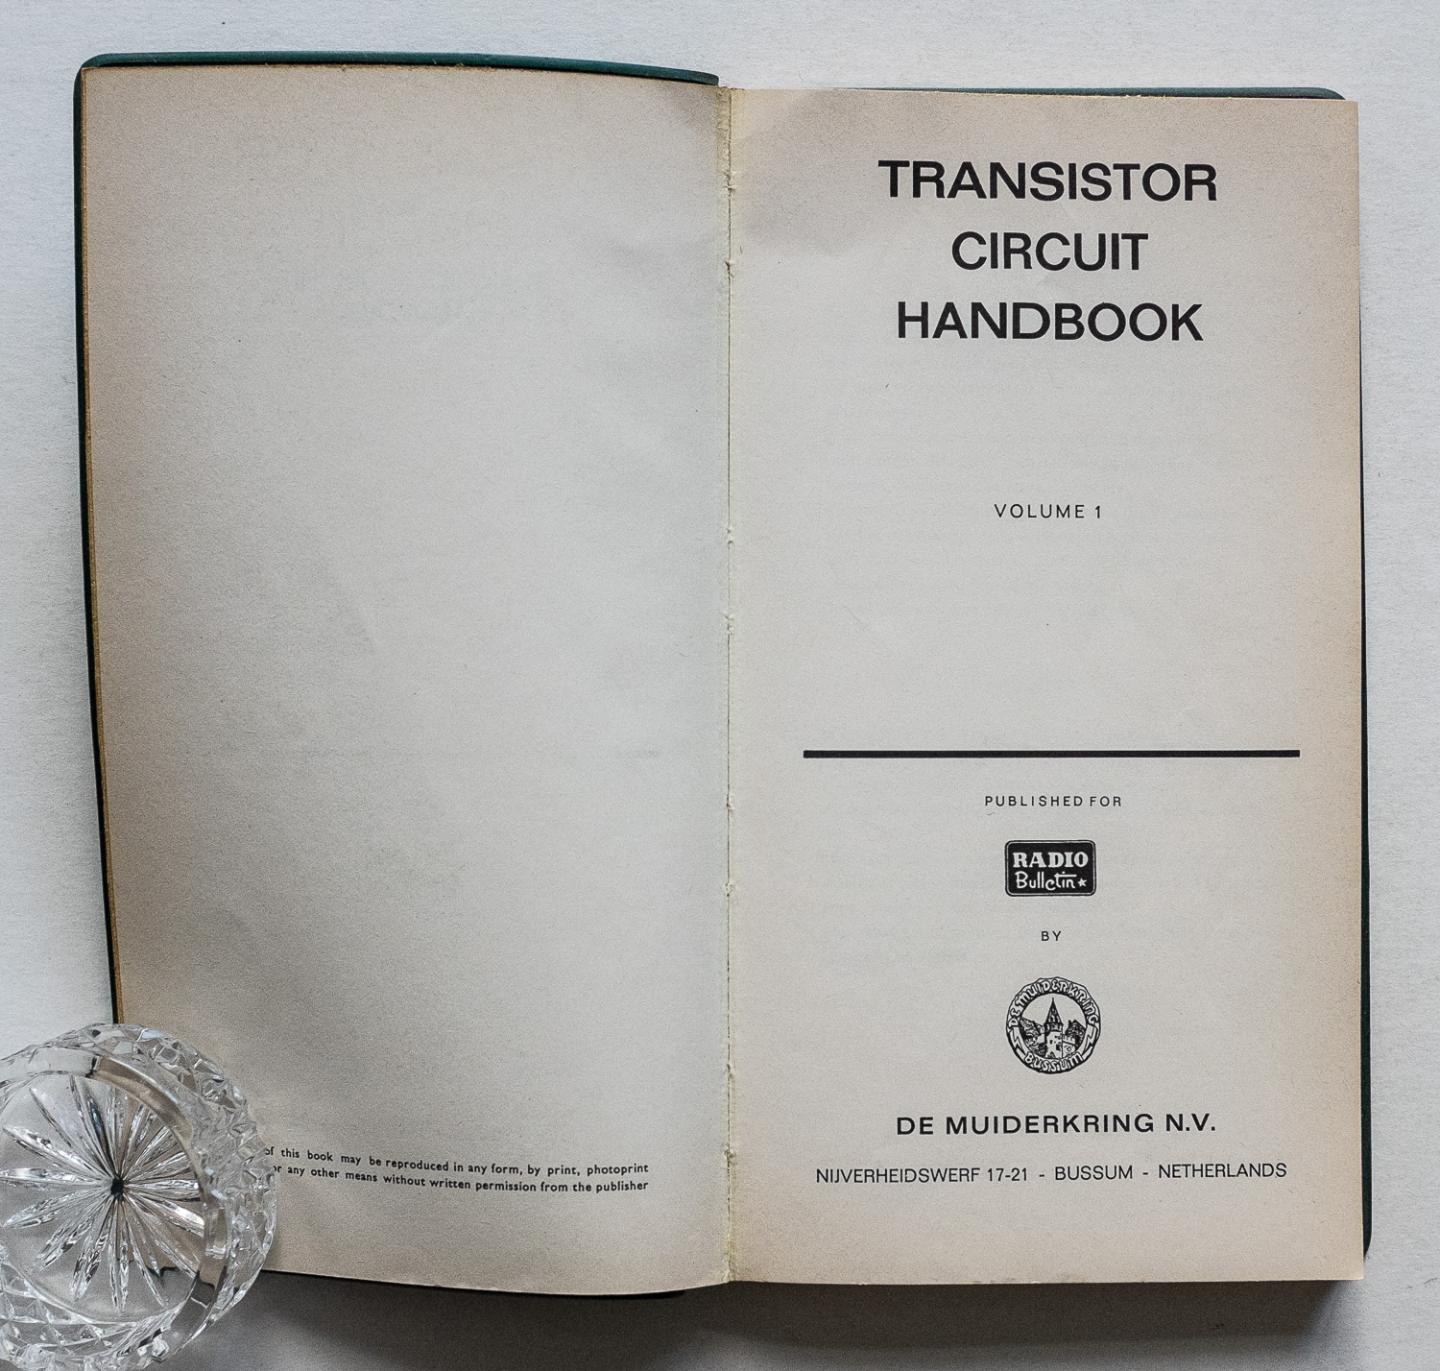  - Transistor Circuits Handbook - published for Radio Bulletin - vol. 1